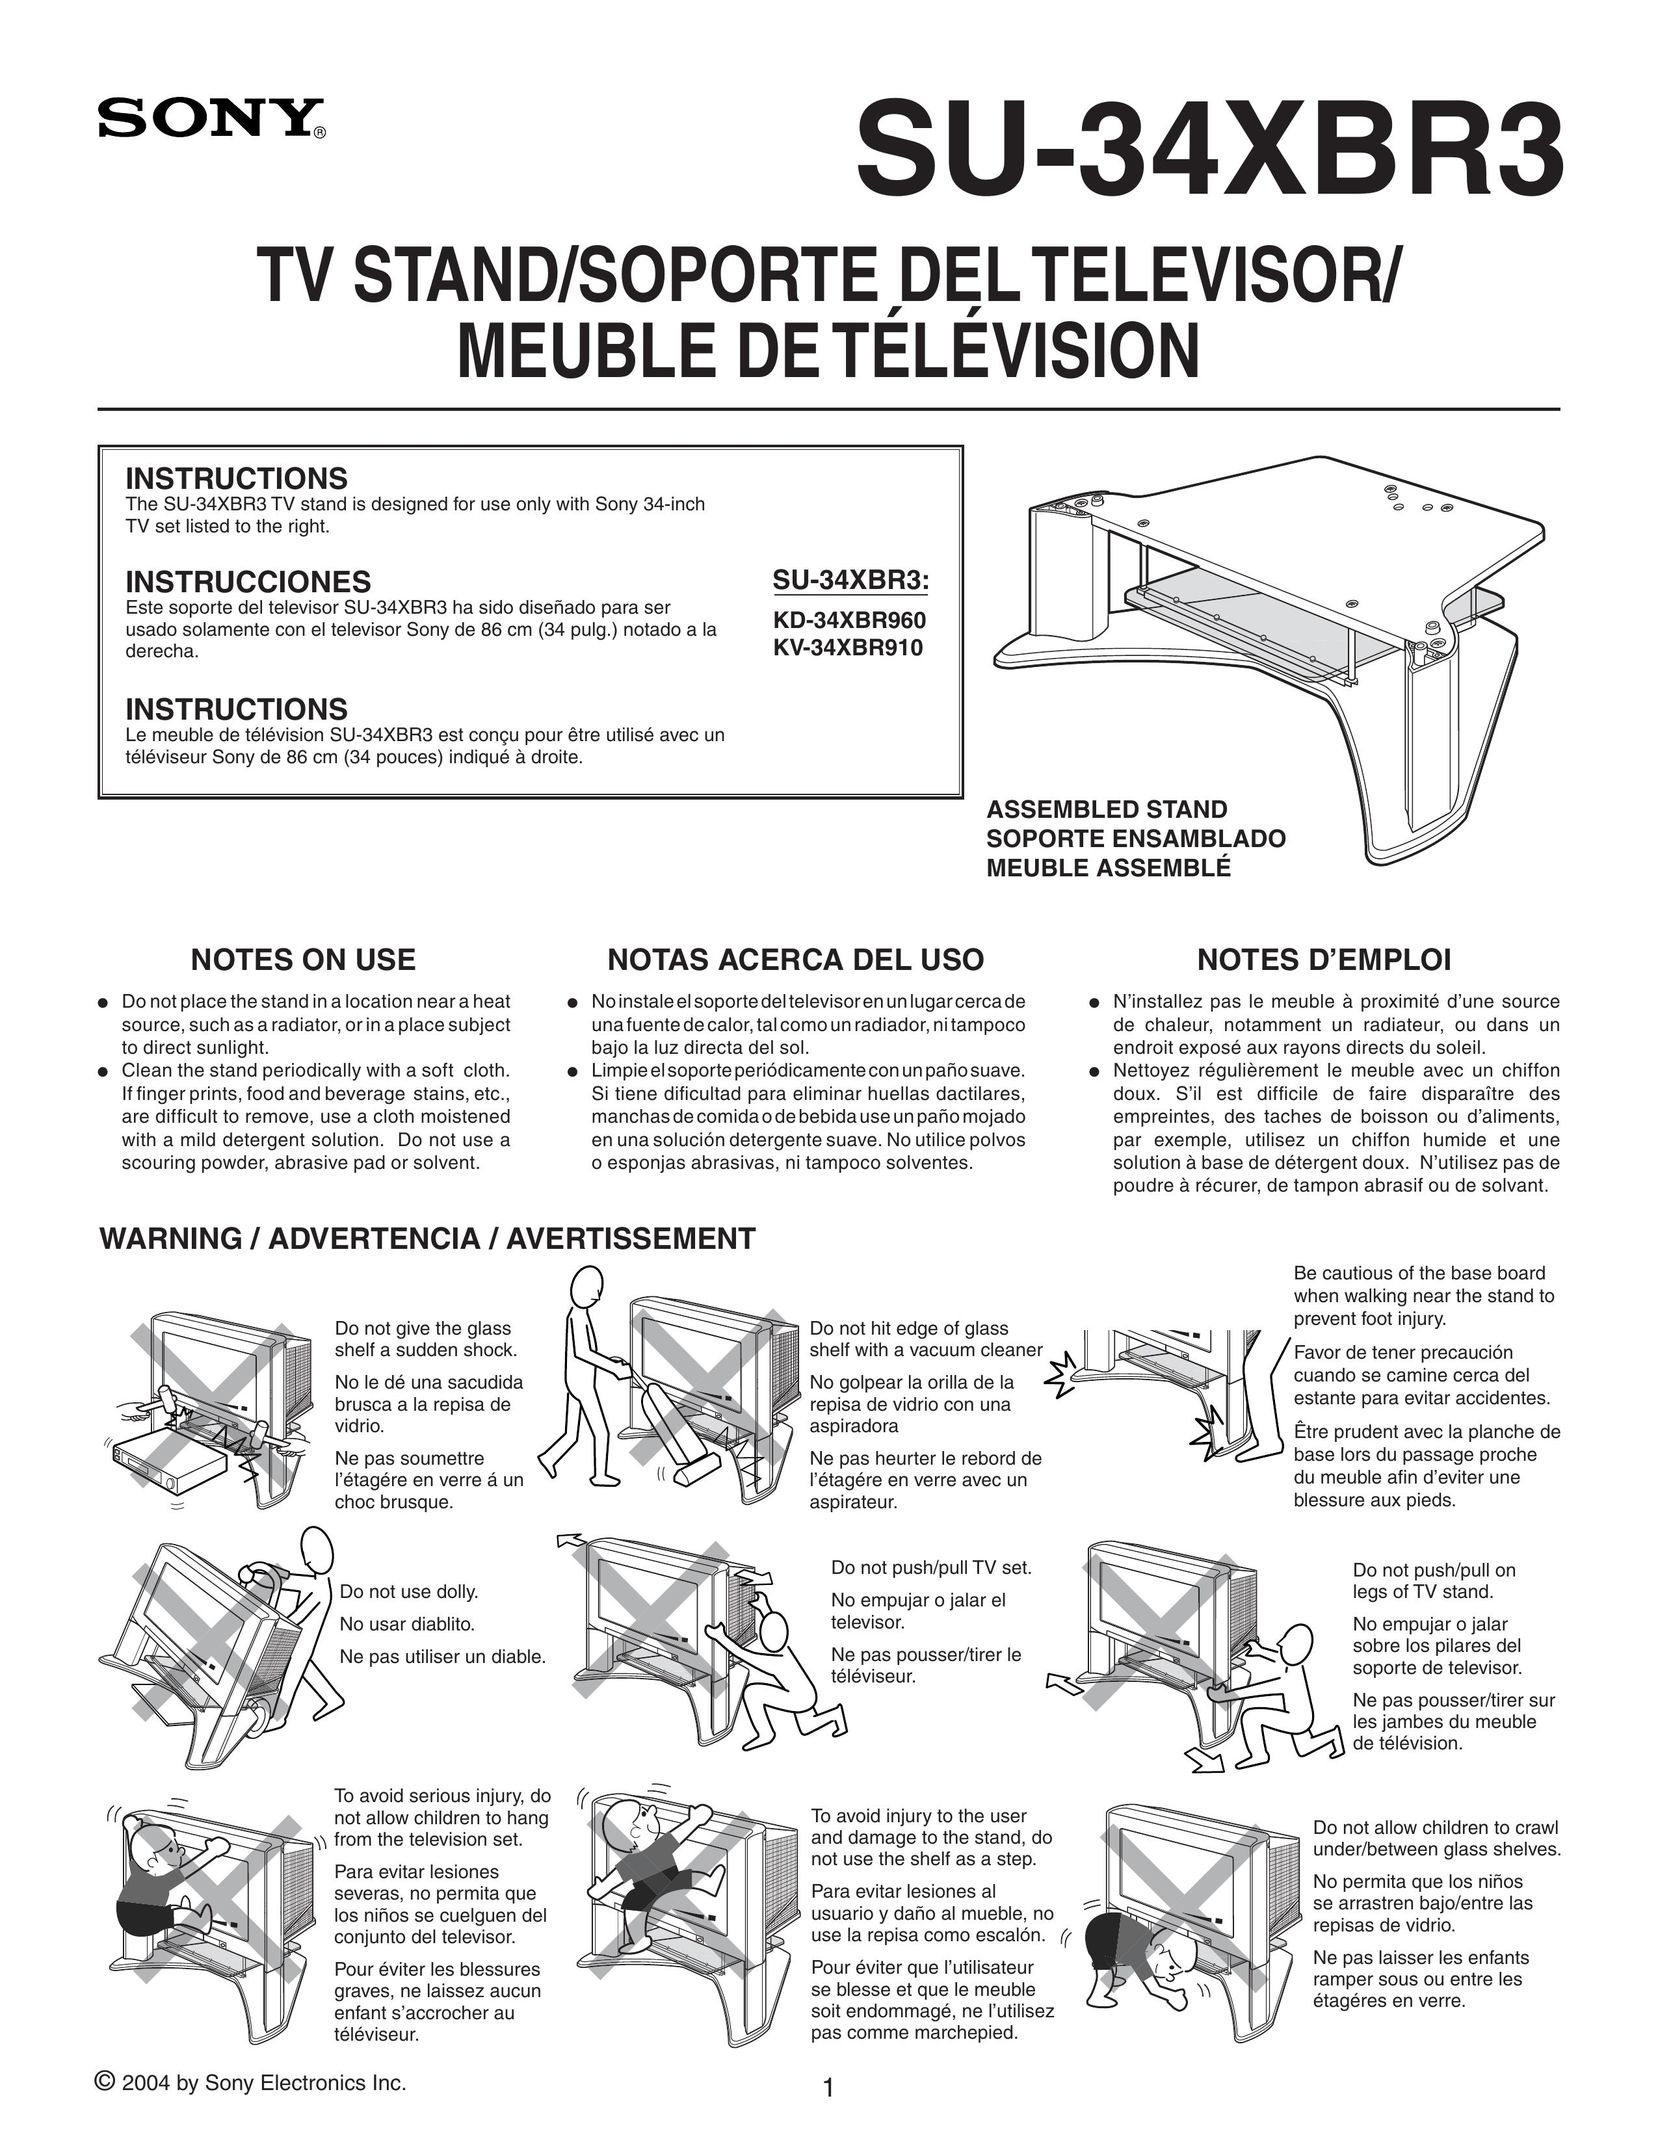 Sony SU-34XBR3 TV Video Accessories User Manual